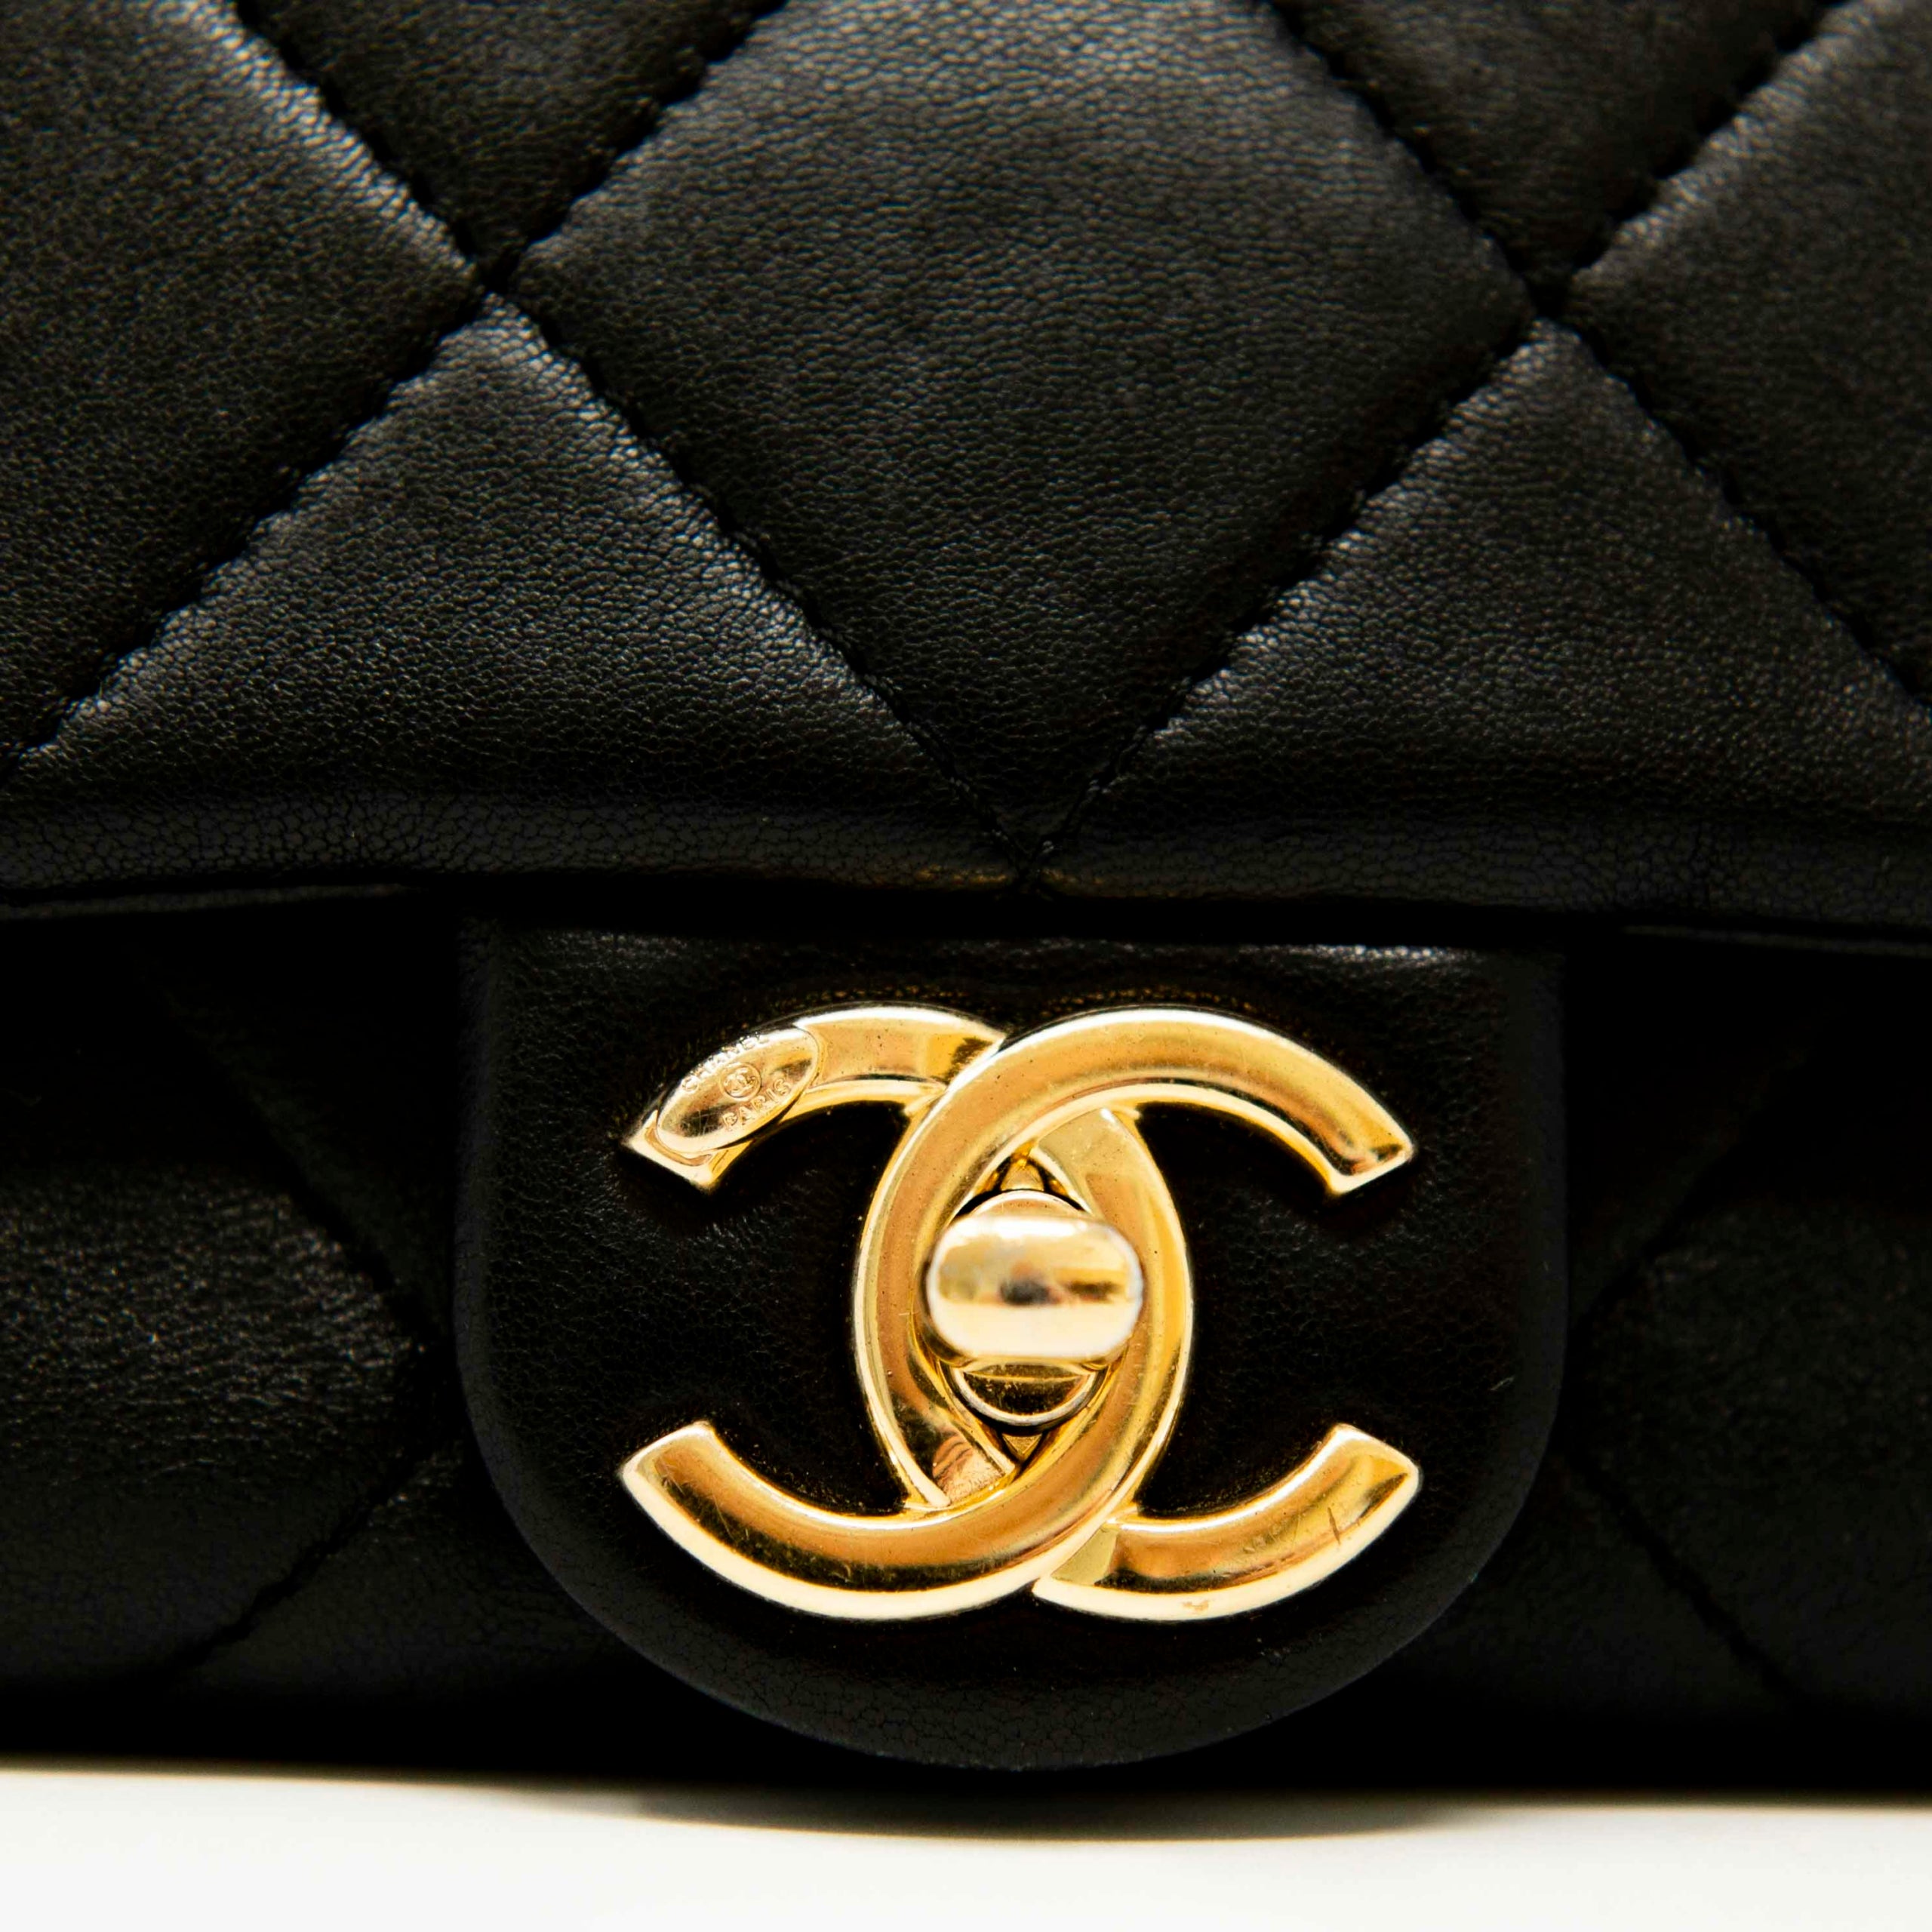 Chanel Black Top Handle Flap